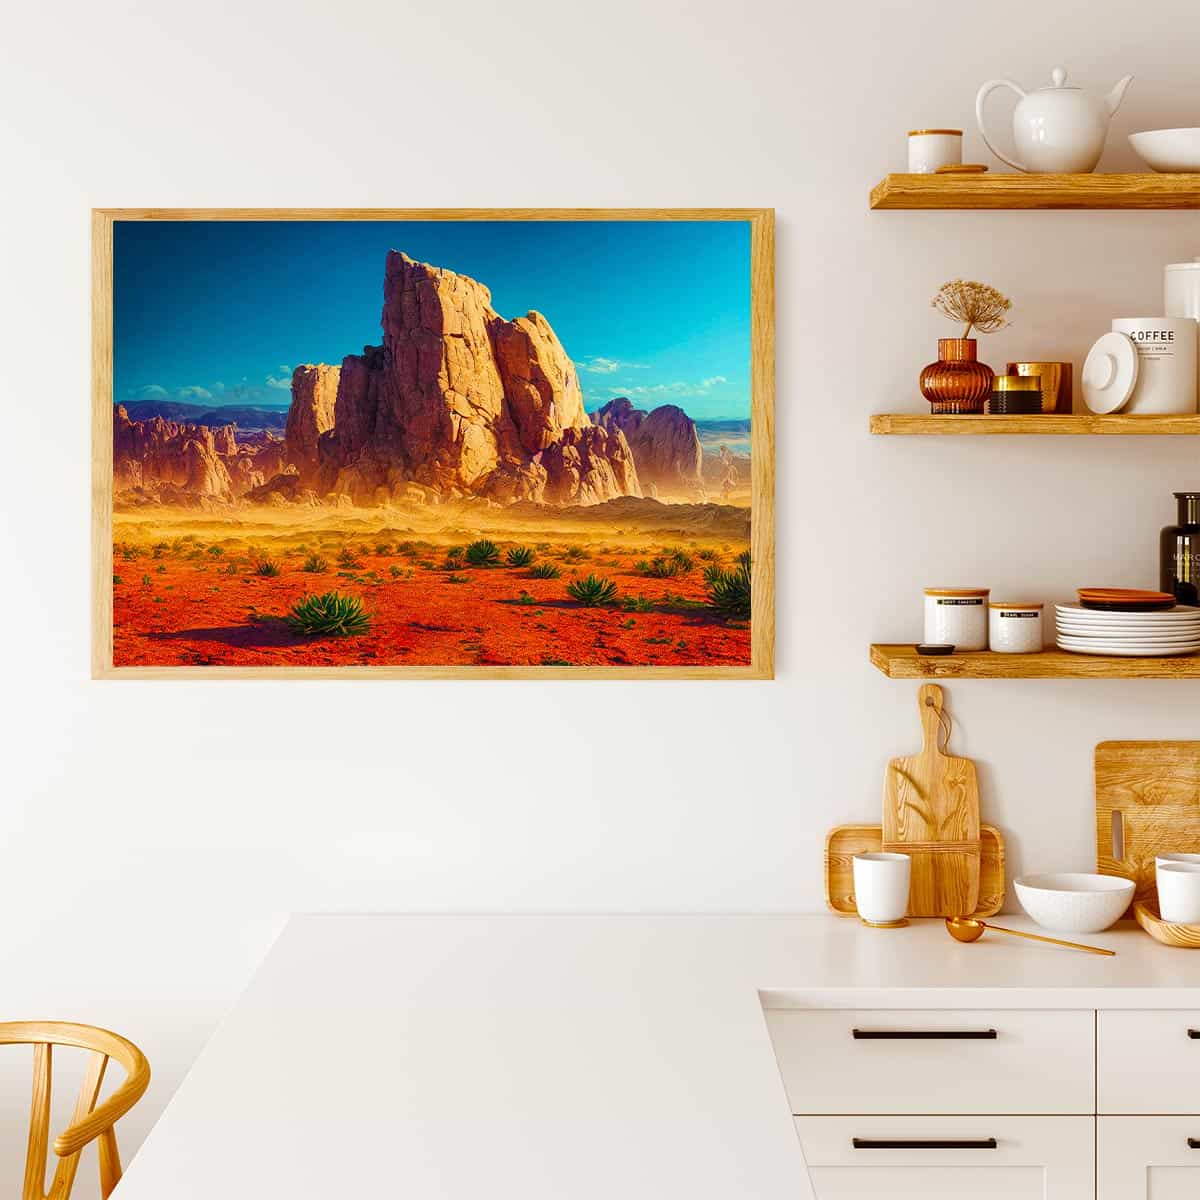 Diamond Painting - Berg der Wüste - gedruckt in Ultra-HD - Berge, Horizontal, Landschaft, Wüste